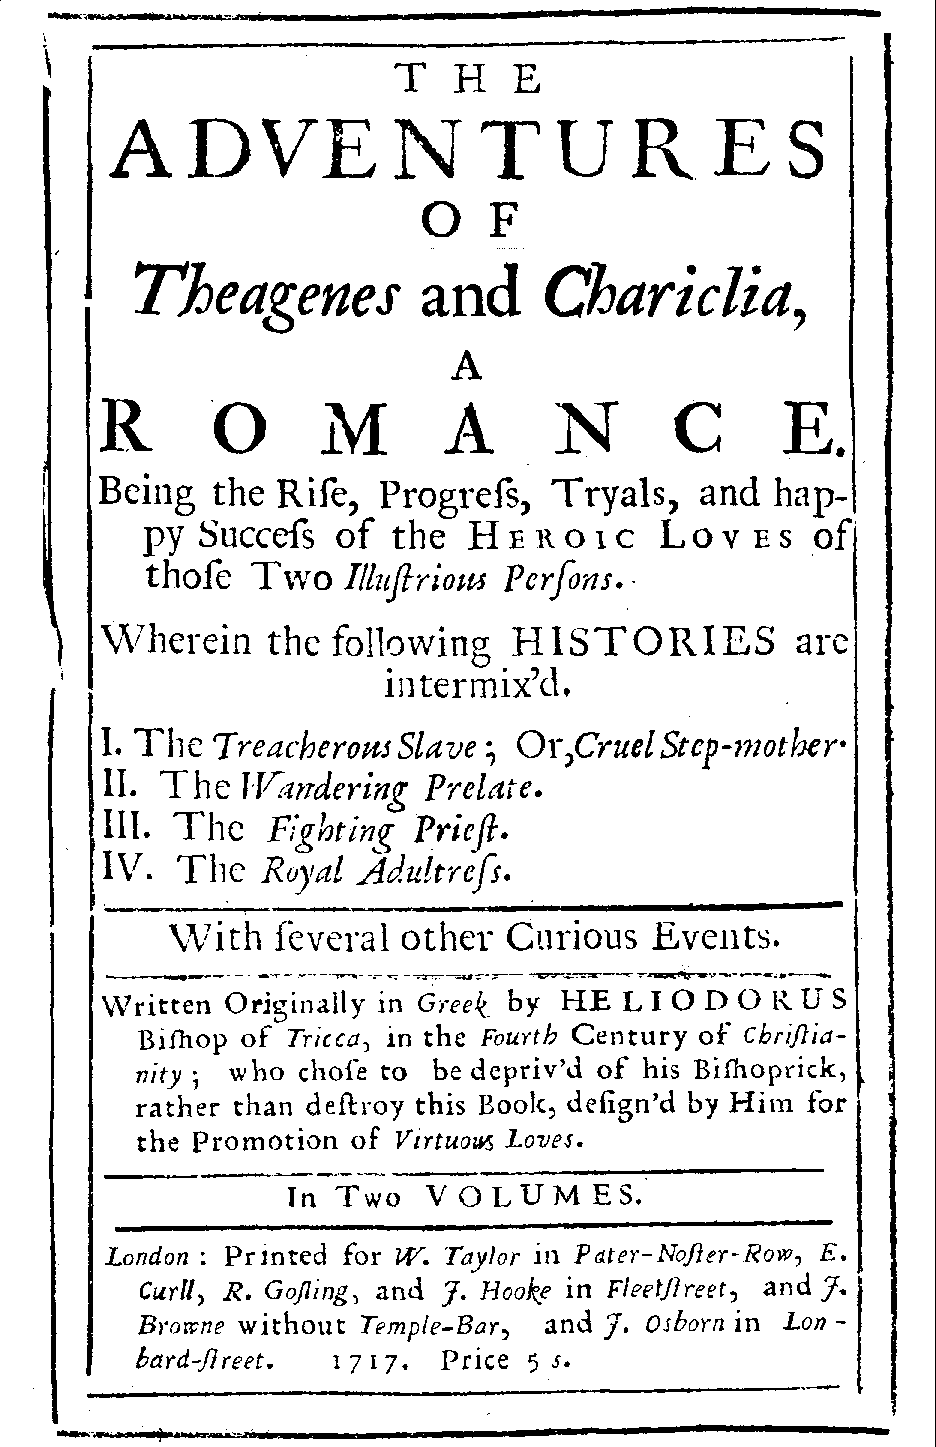 Heliodorus, The Adventures of Theagenes and Chariclia (London: W. Taylor/ E. Curll/ R. Gosling/ J. Hooke/ J. Browne/ J. Osborn, 1717).